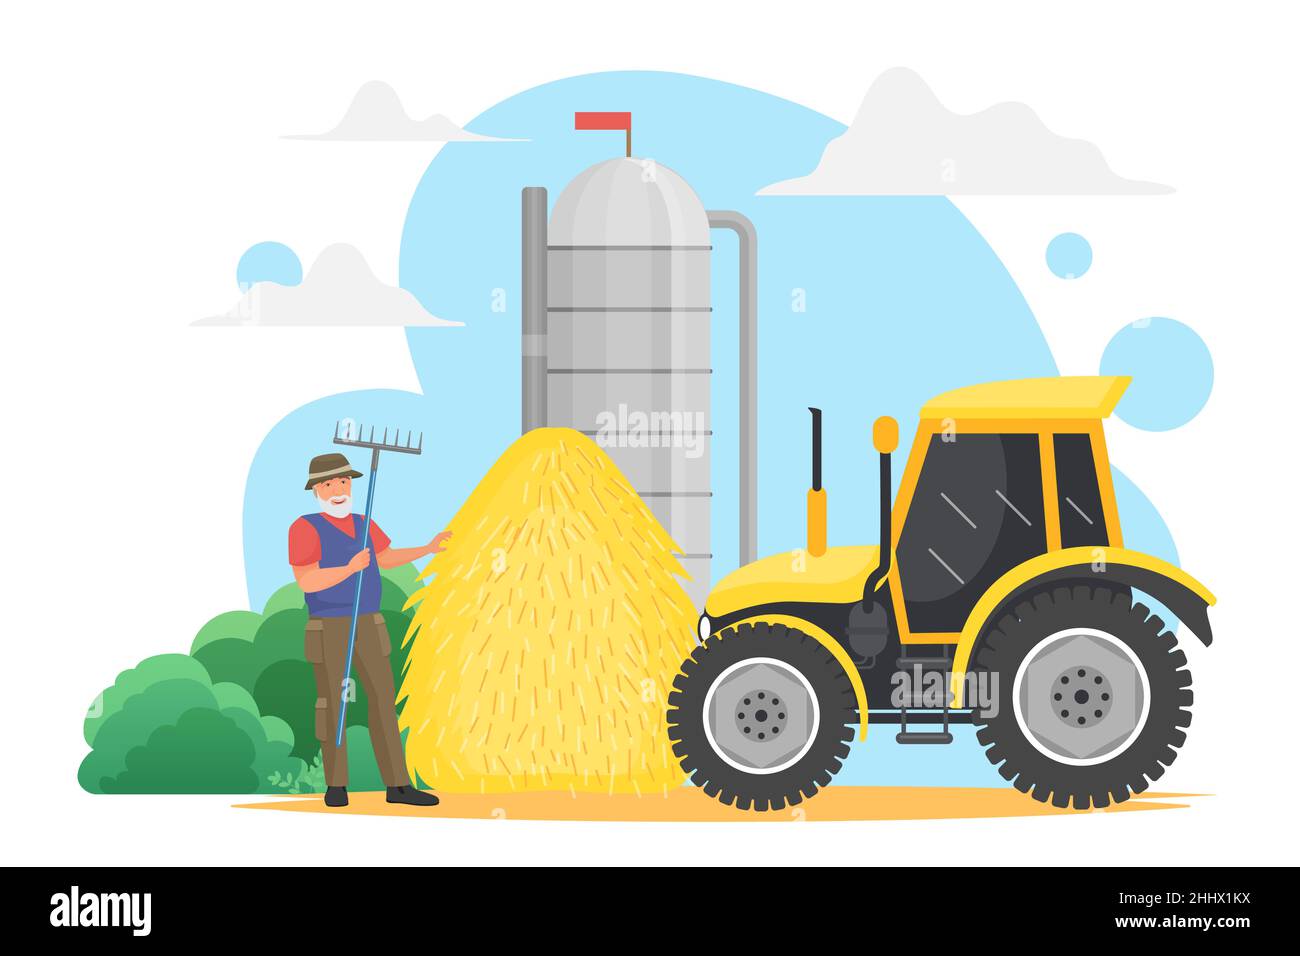 Farmer people work in village, grain harvest agriculture technology vector illustration. Cartoon happy elderly man worker character holding pitchfork, Stock Vector